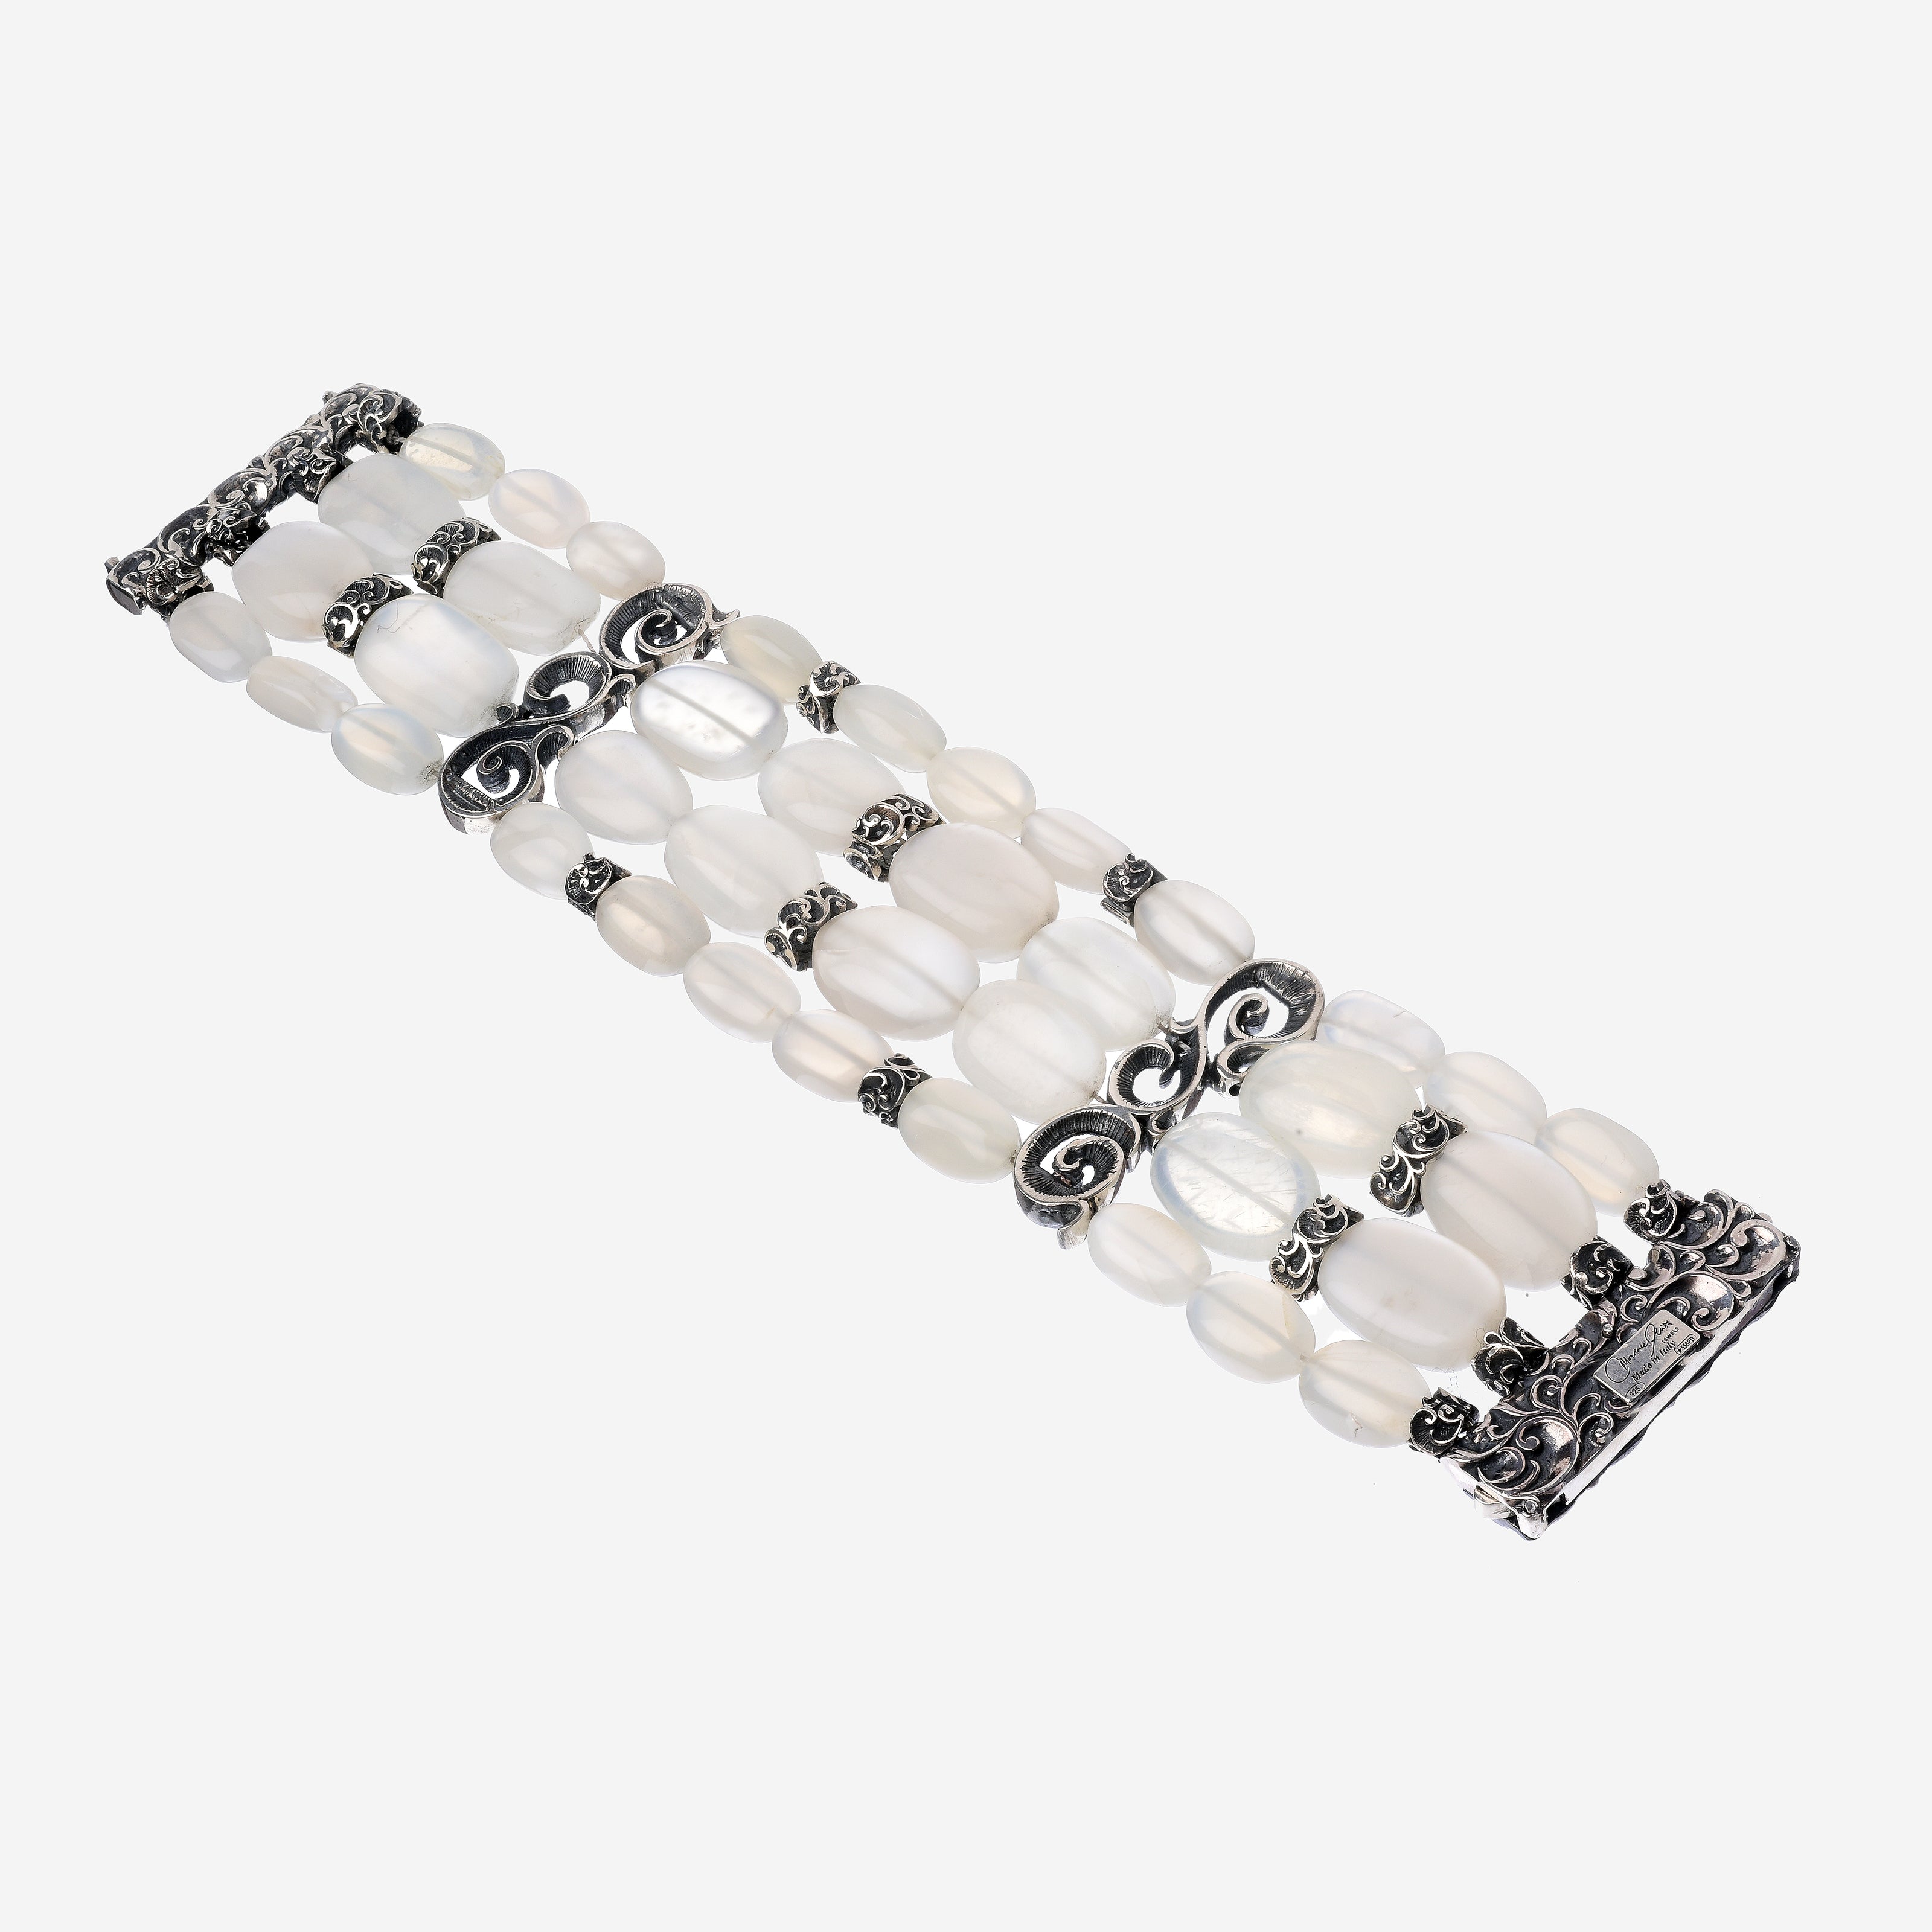 Opera bracelet with four rows of stones